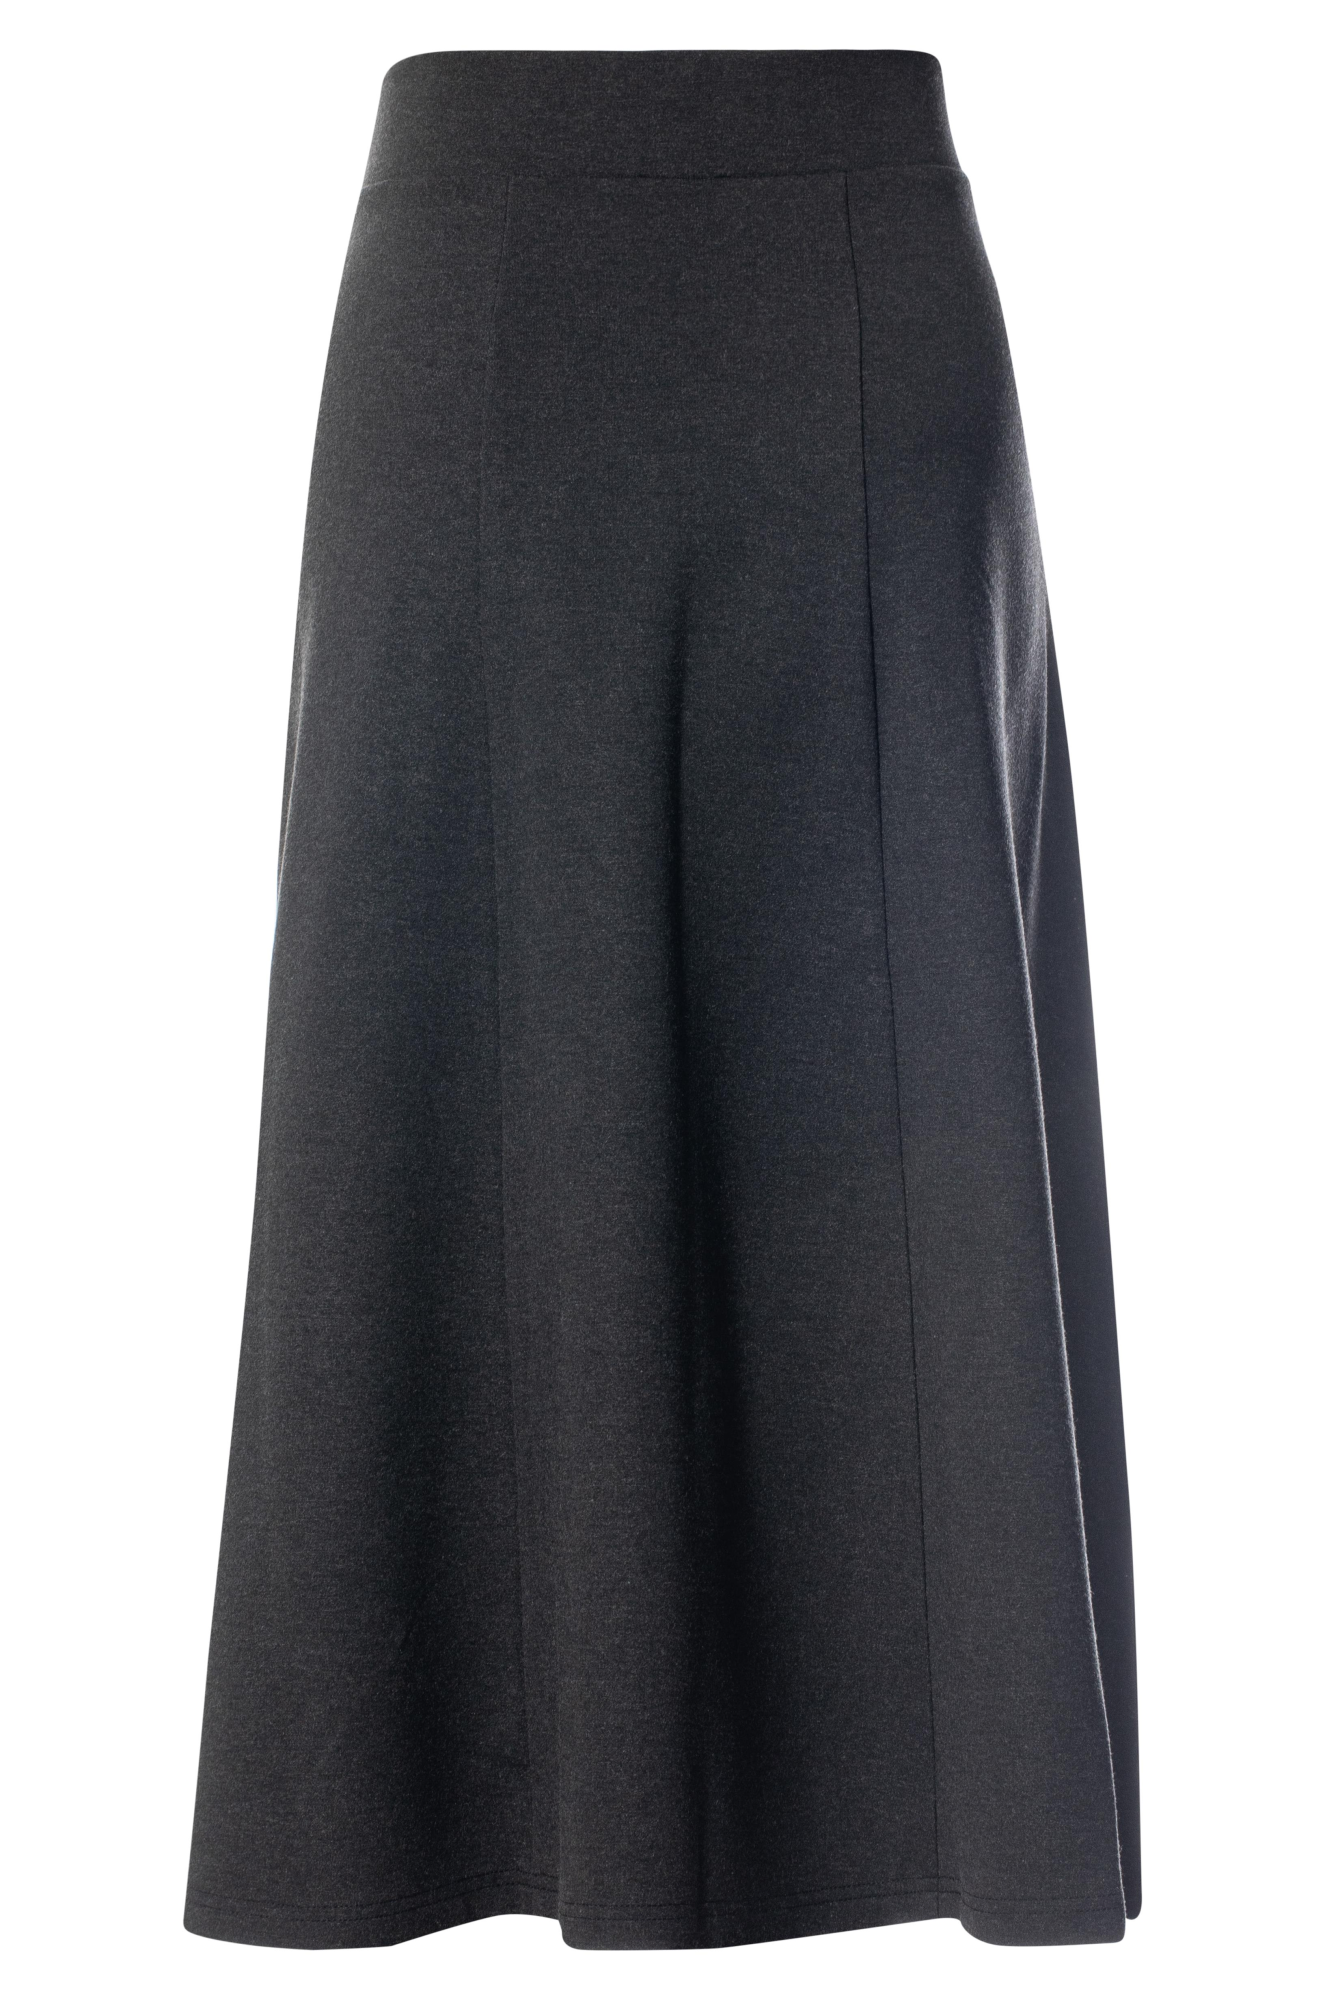 New Ponti pull on Skirt | CHARCOAL MARLE | 7806ZZ – Ballentynes Fashion ...